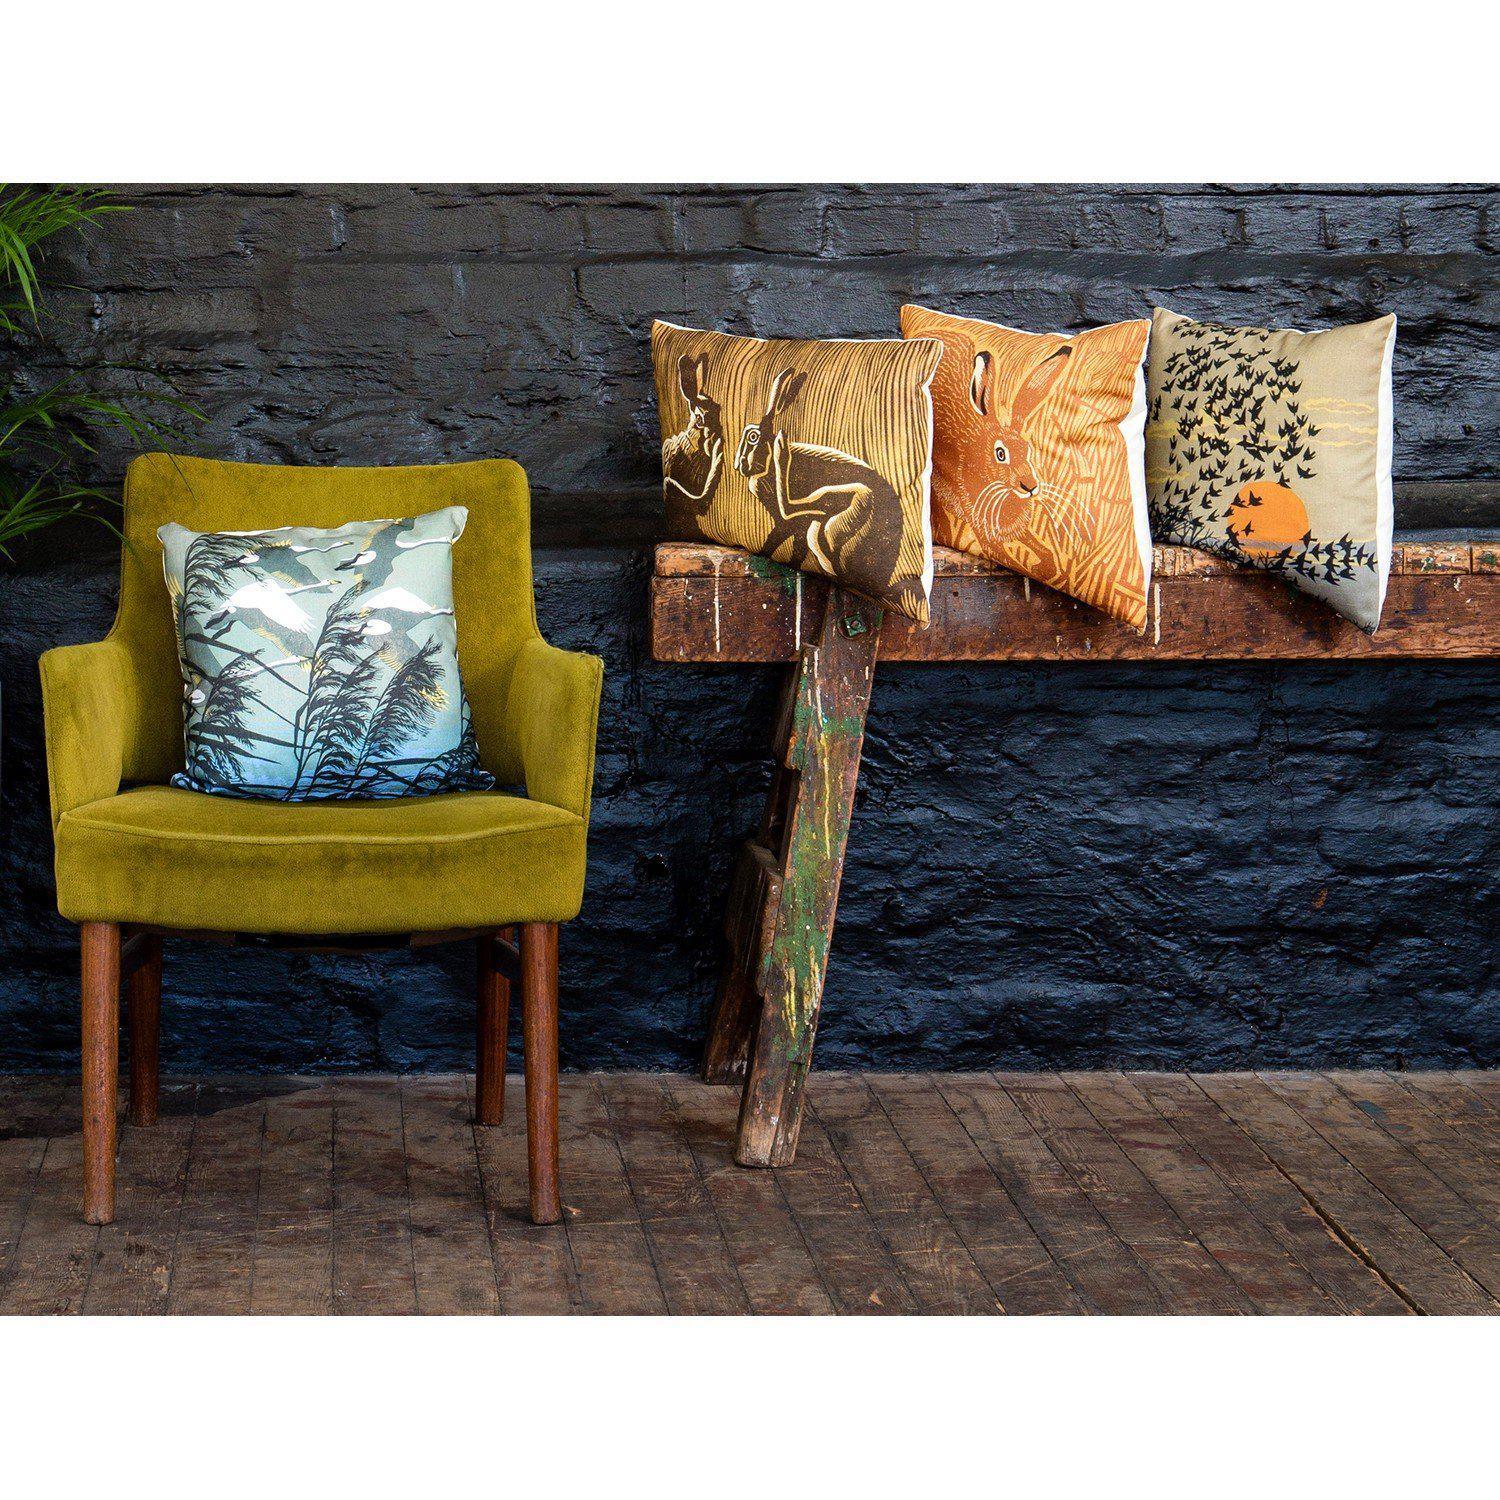 Hurry Hare - Robert Gillmor Cushion - Handmade Cushions UK - WeLoveCushions